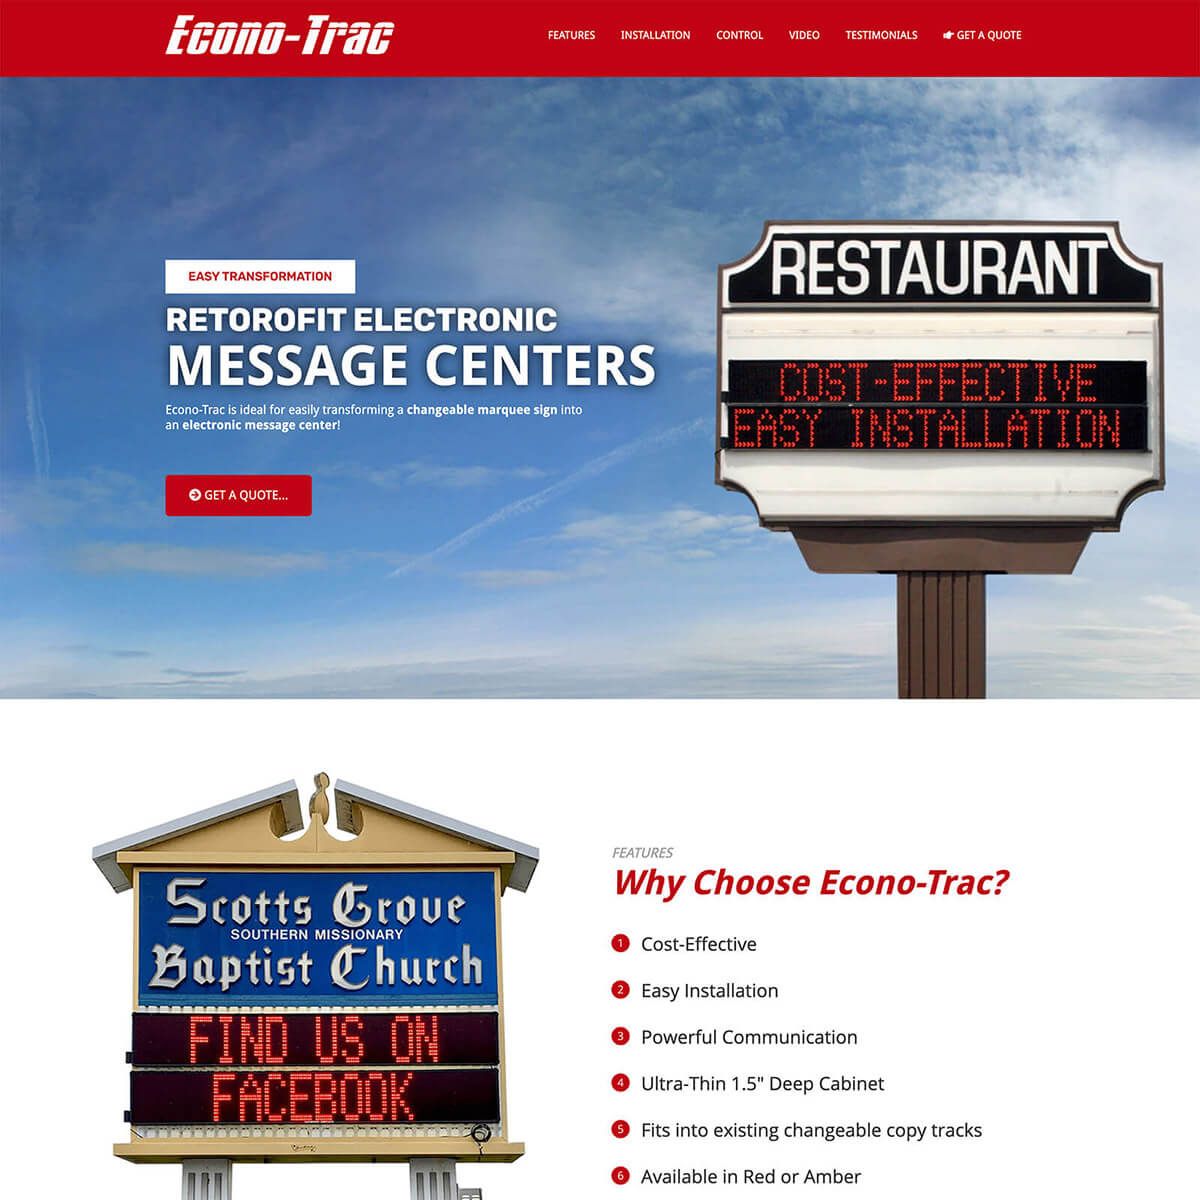 Econo-Trac website by EyeSite Creations